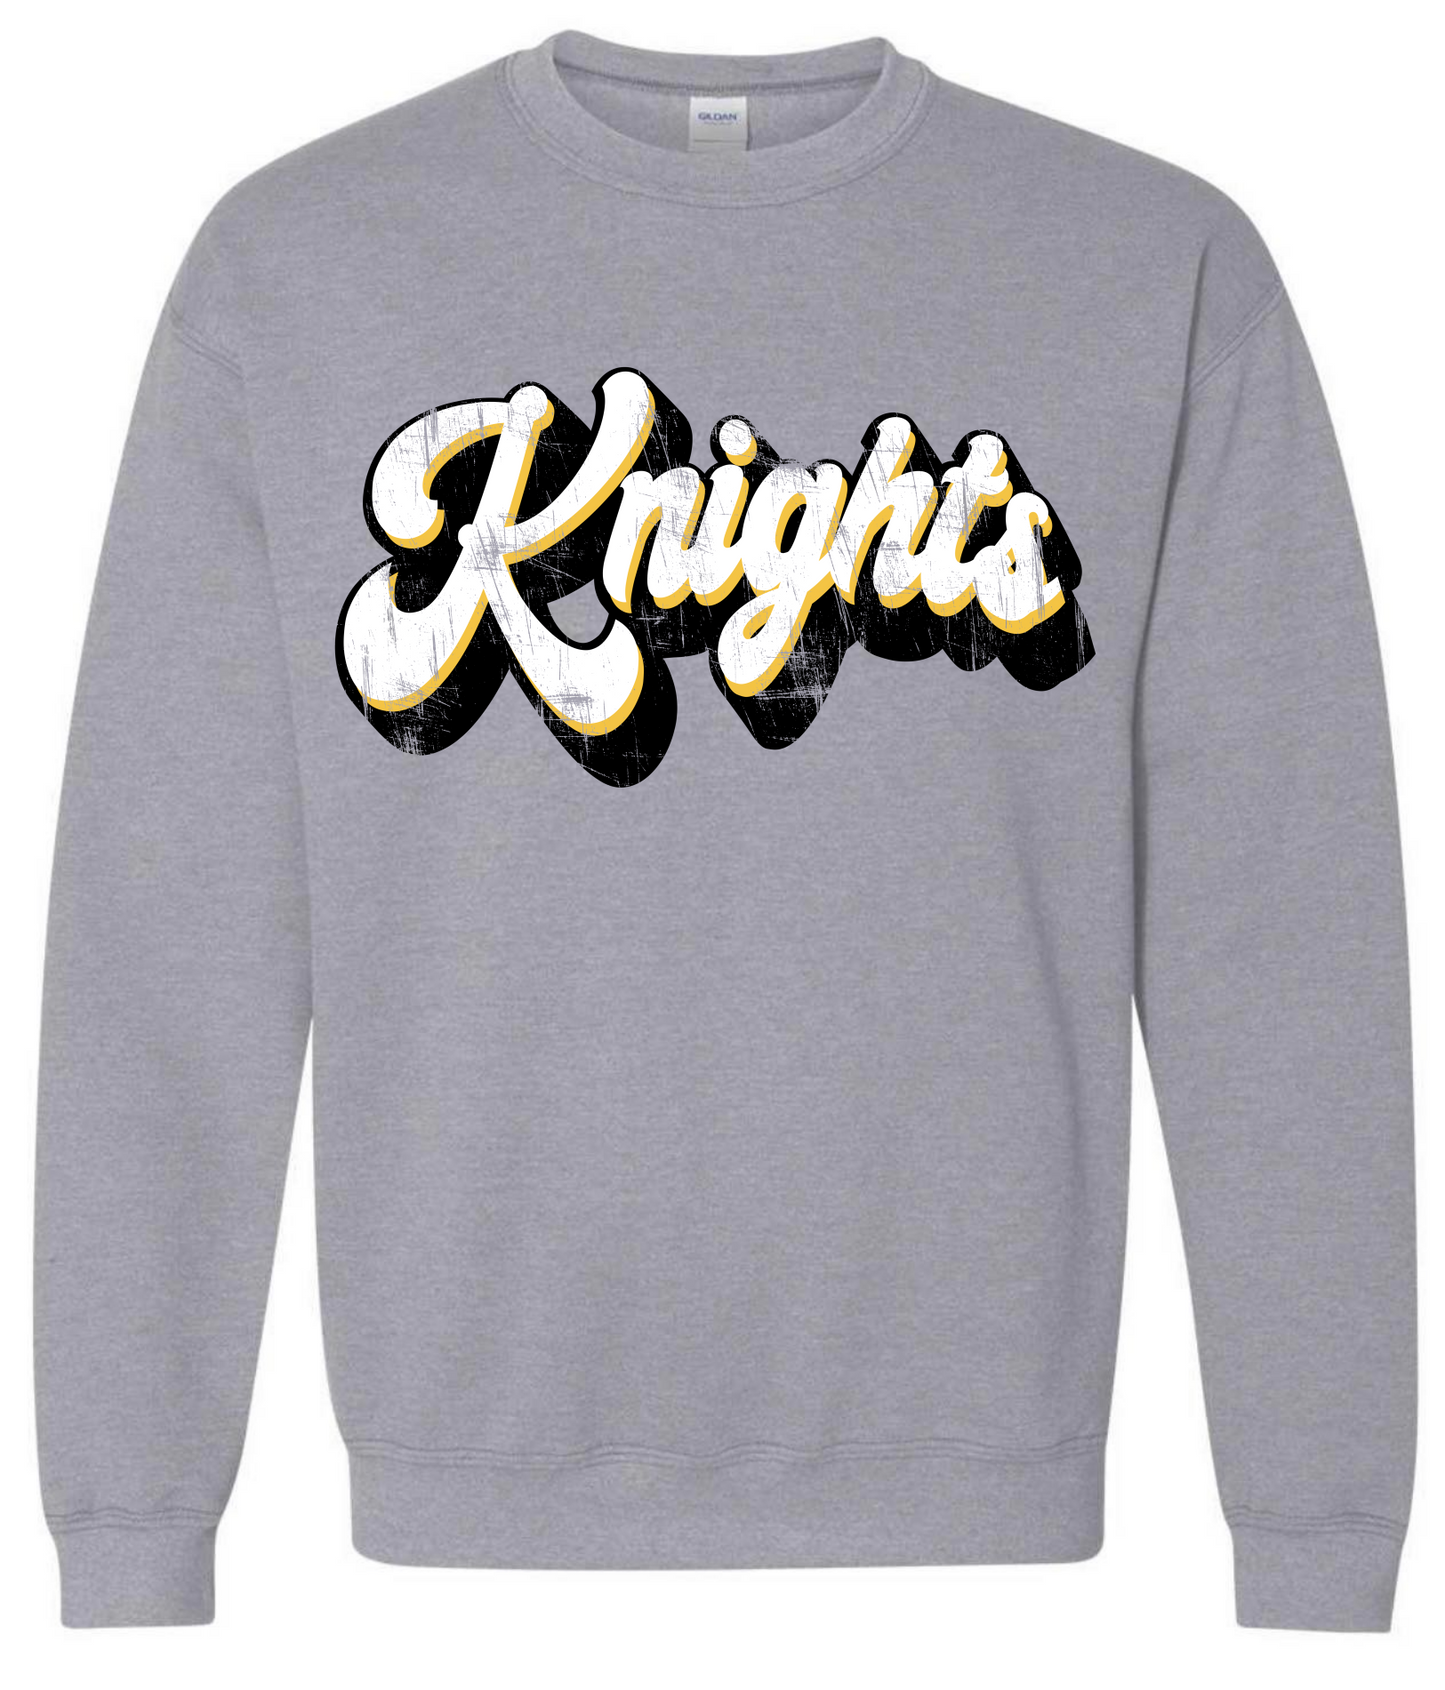 Distressed Retro Knights Sweatshirt